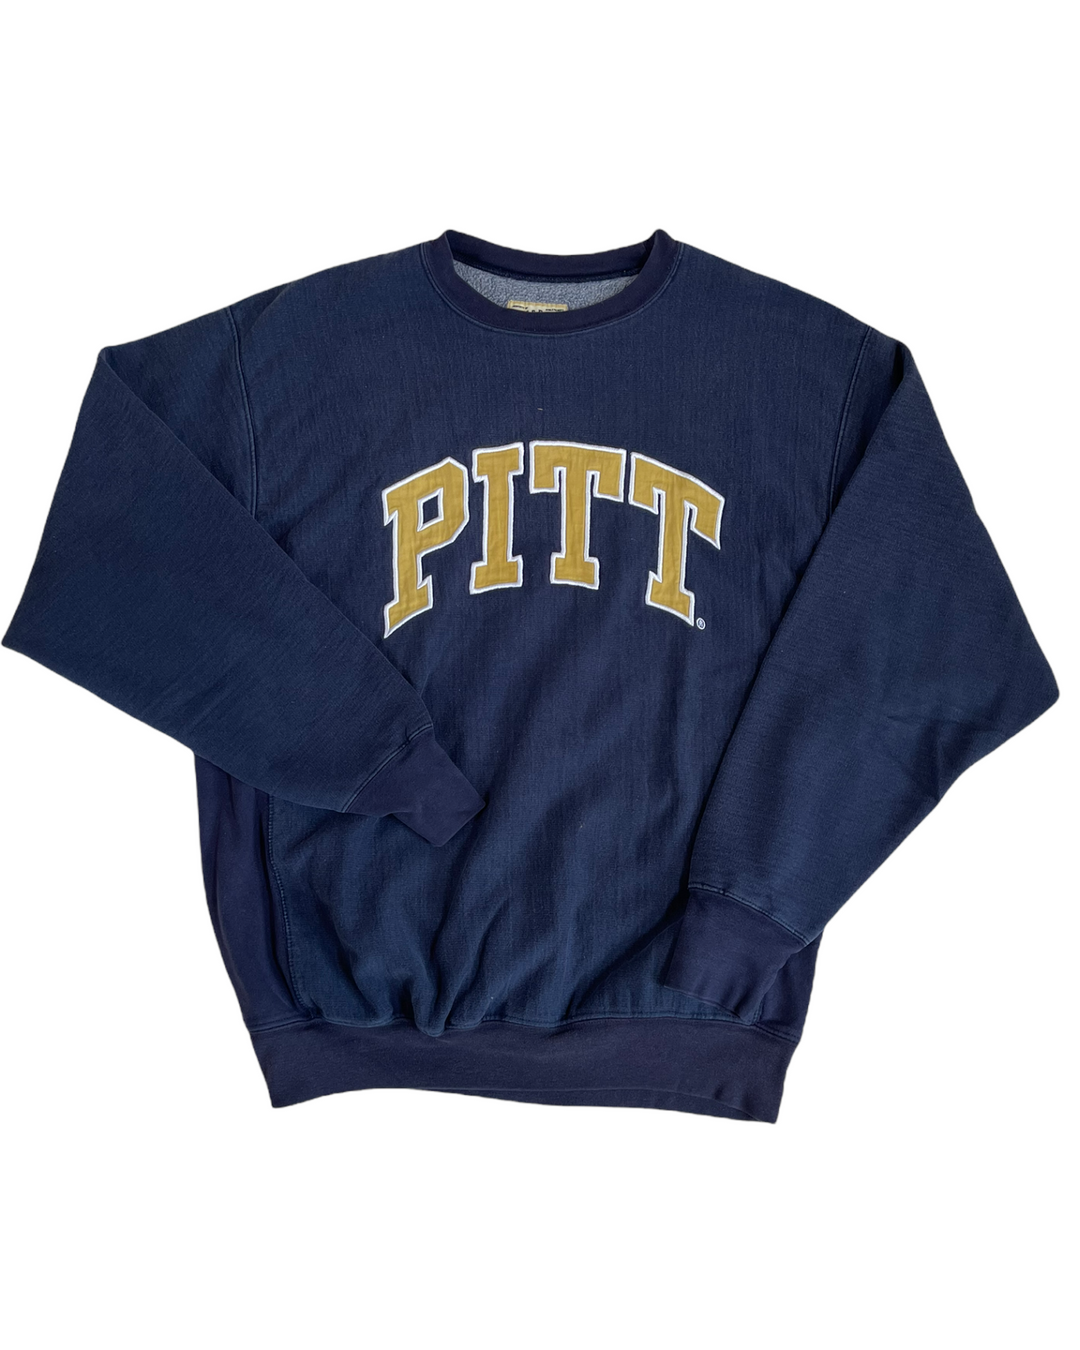 Pitt Vintage Sweatshirt